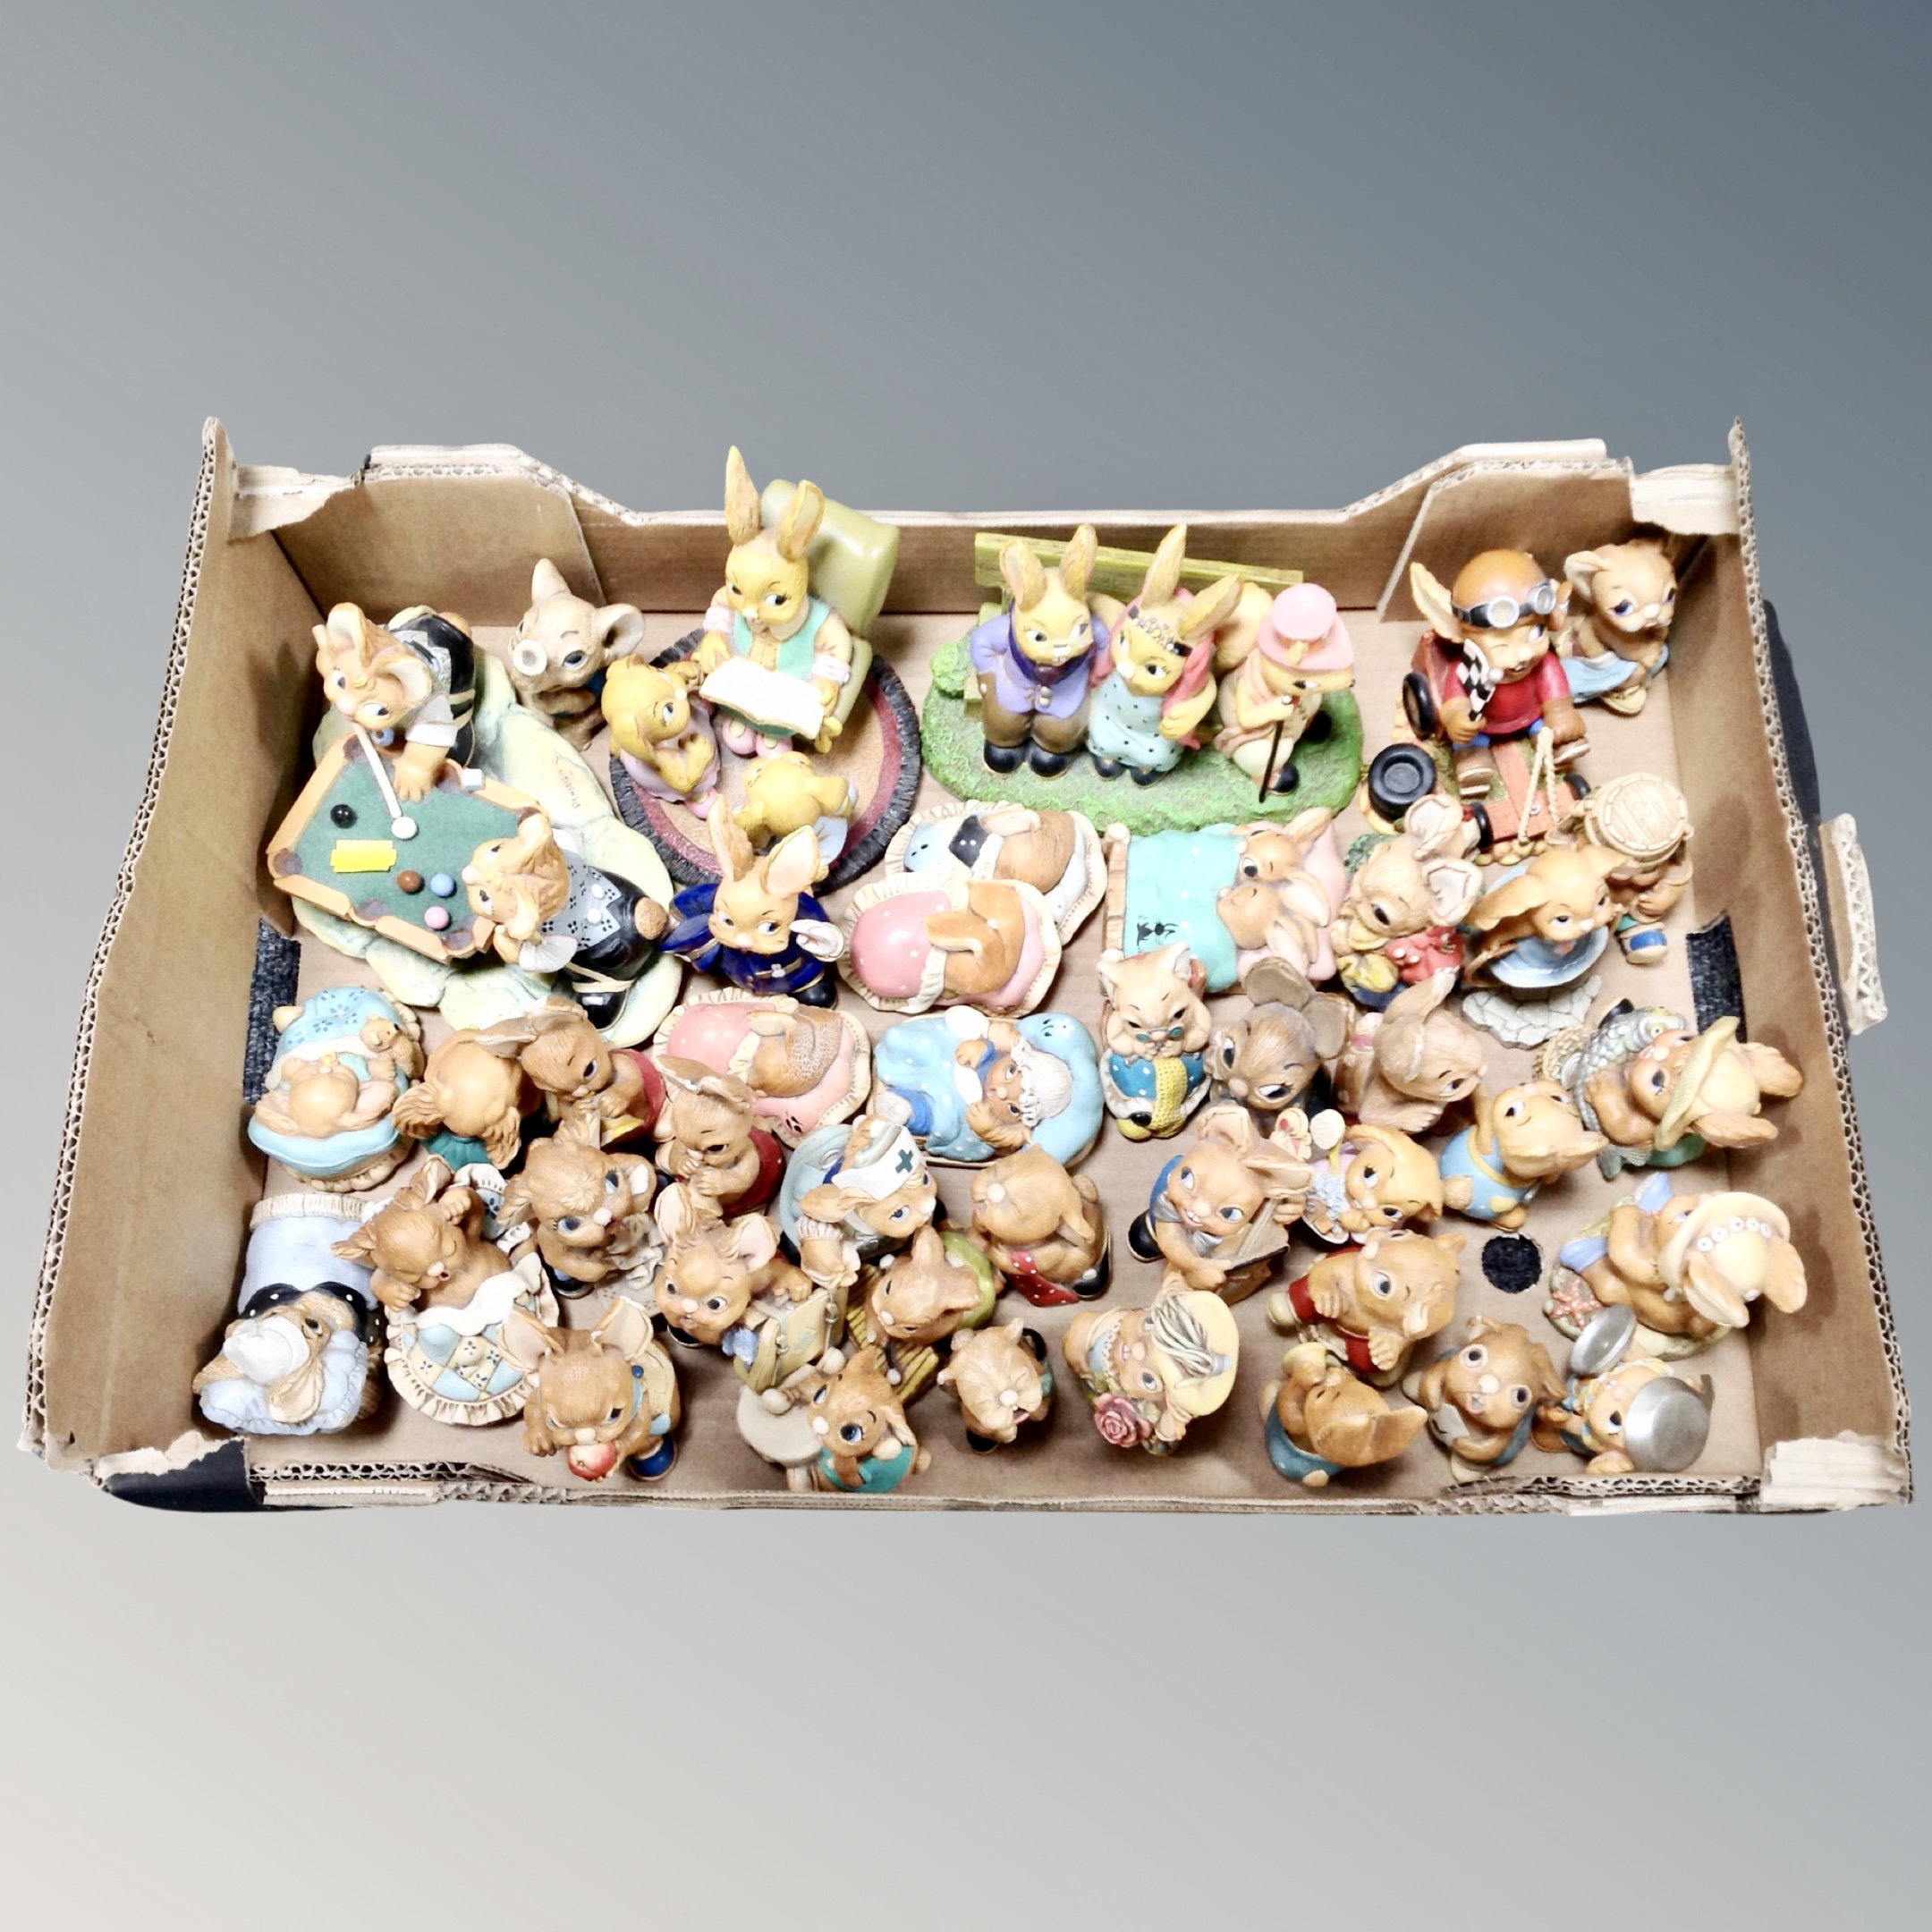 A box of Pendelfin rabbit figures